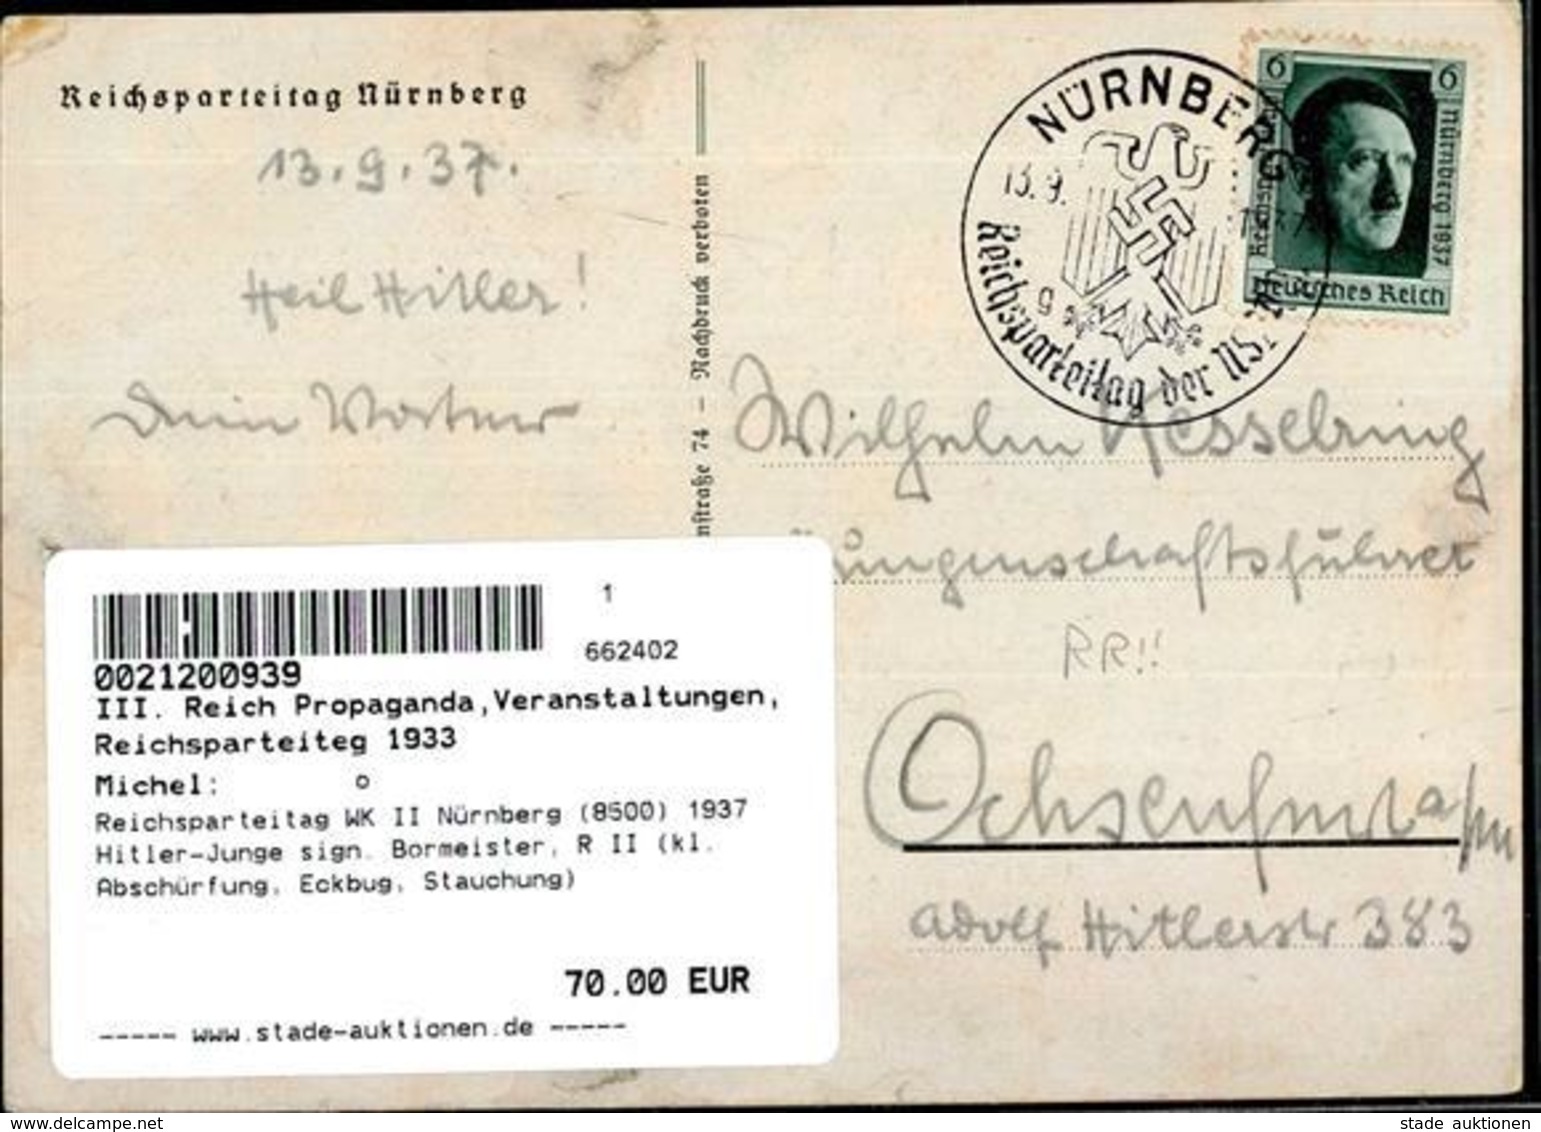 Reichsparteitag WK II Nürnberg (8500) 1937 Hitler-Junge Sign. Bormeister, R II (kl. Abschürfung, Eckbug, Stauchung) - War 1939-45